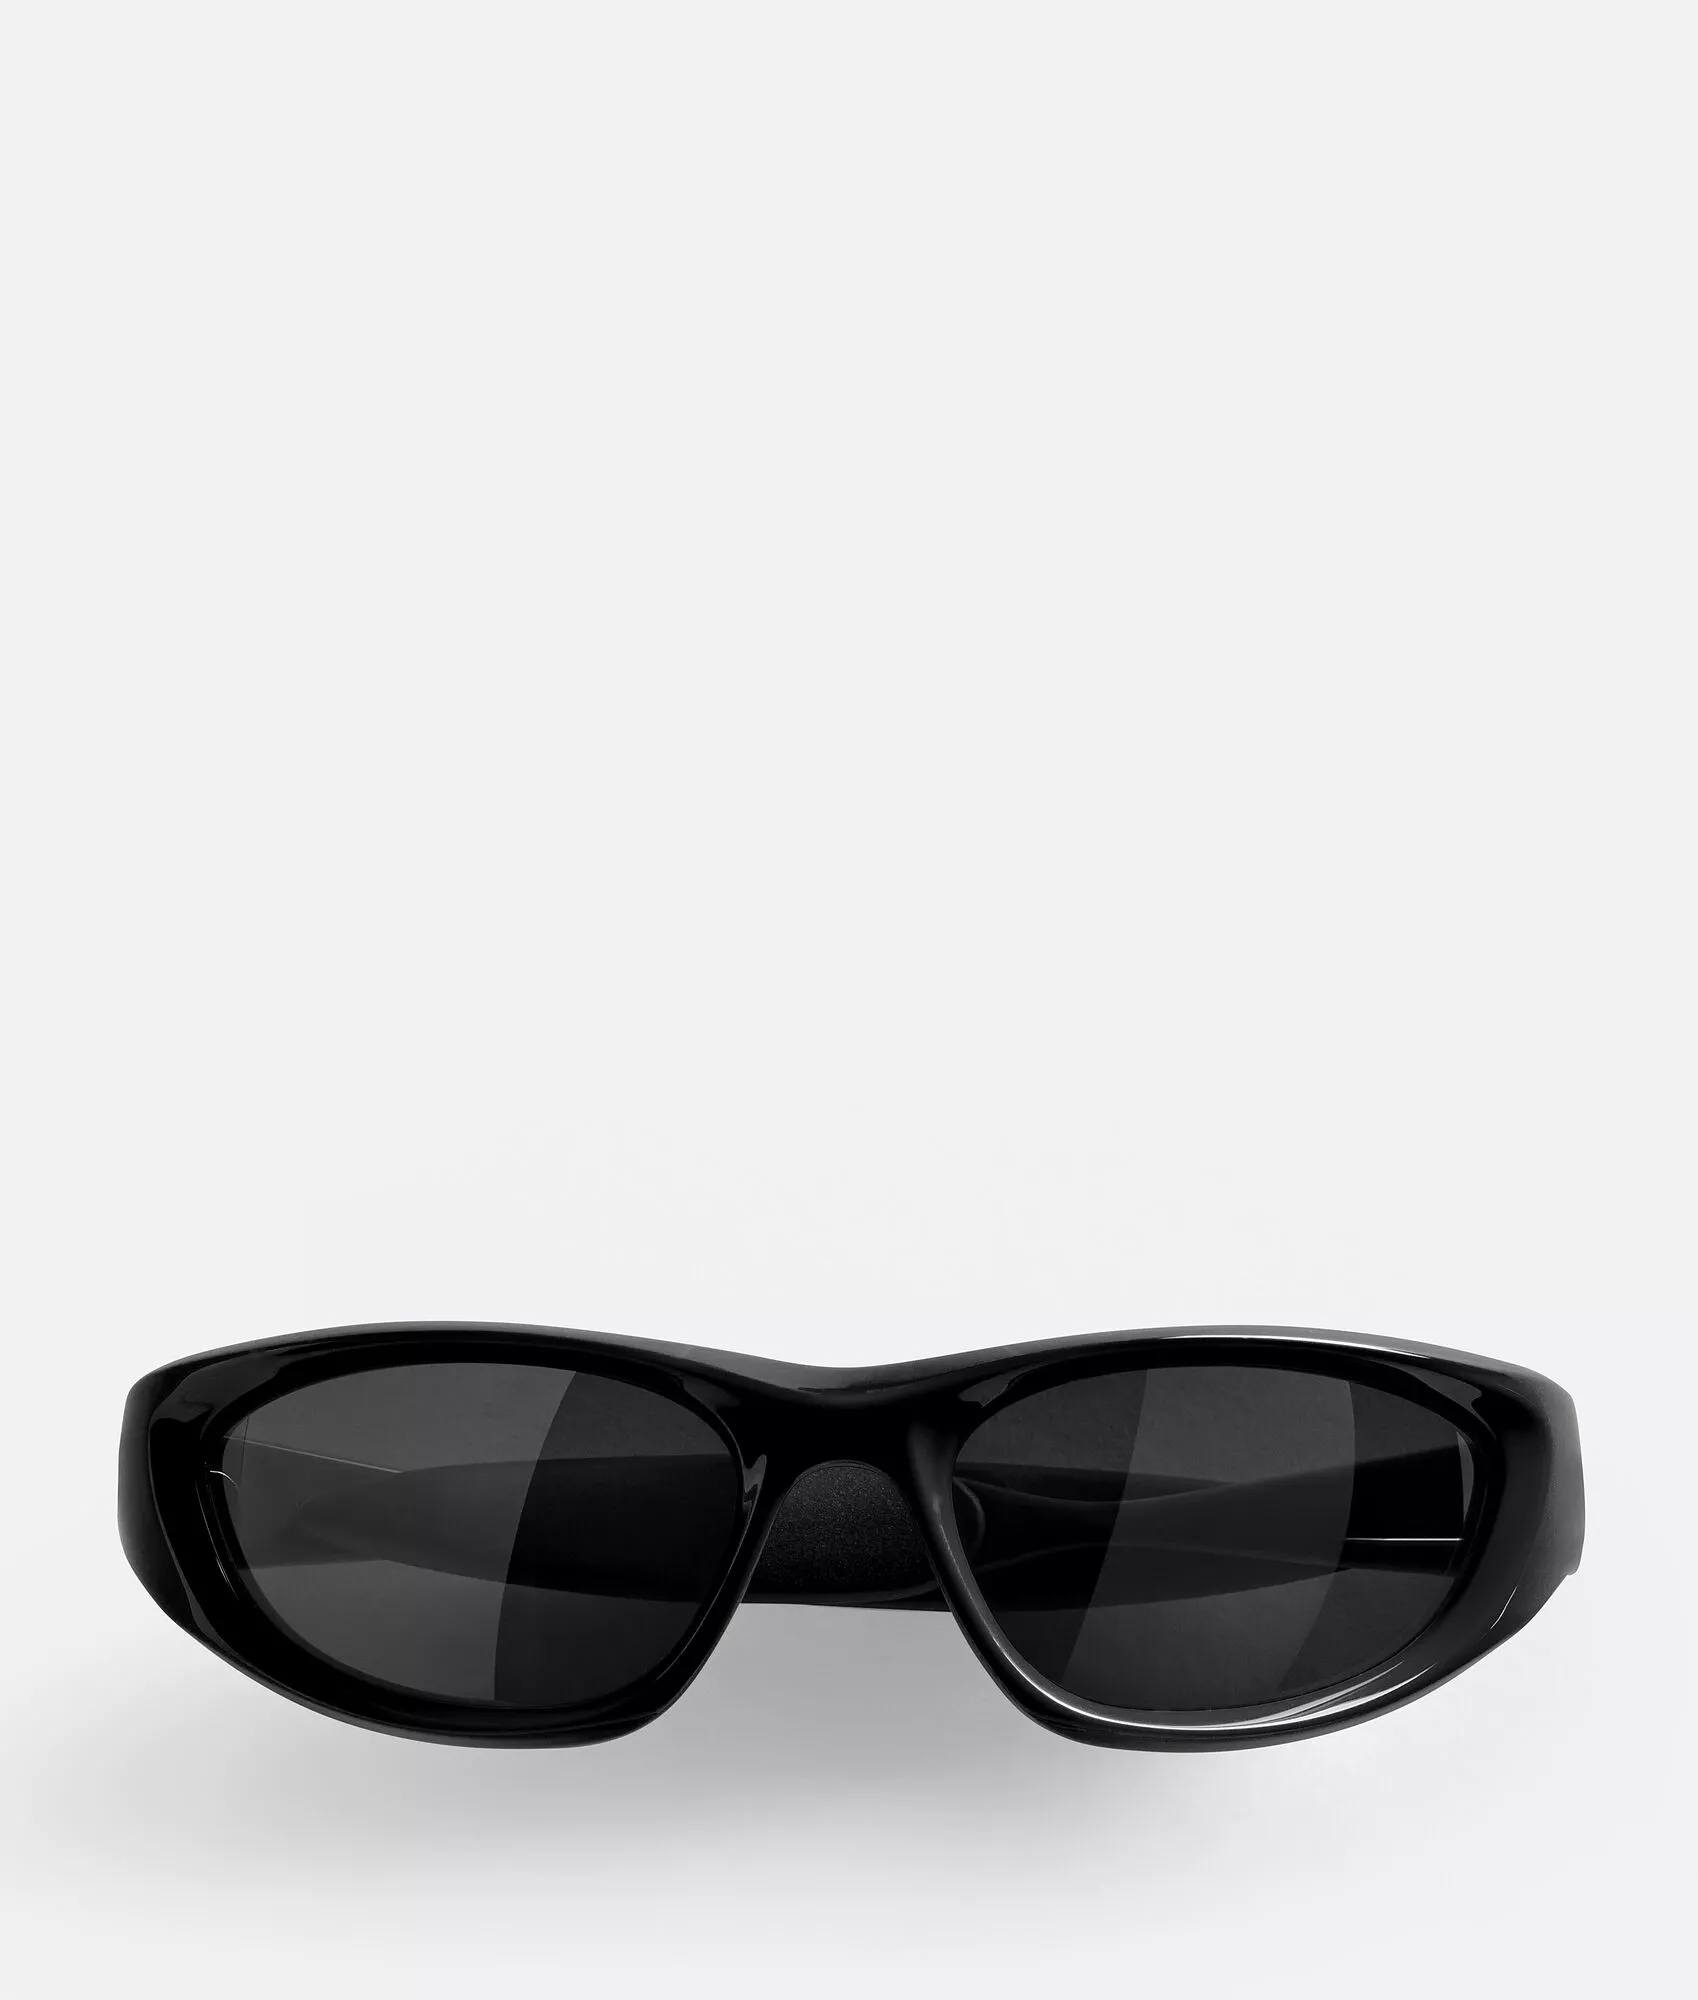 Bottega Veneta Eyewear Cone wrap-around Sunglasses - Farfetch